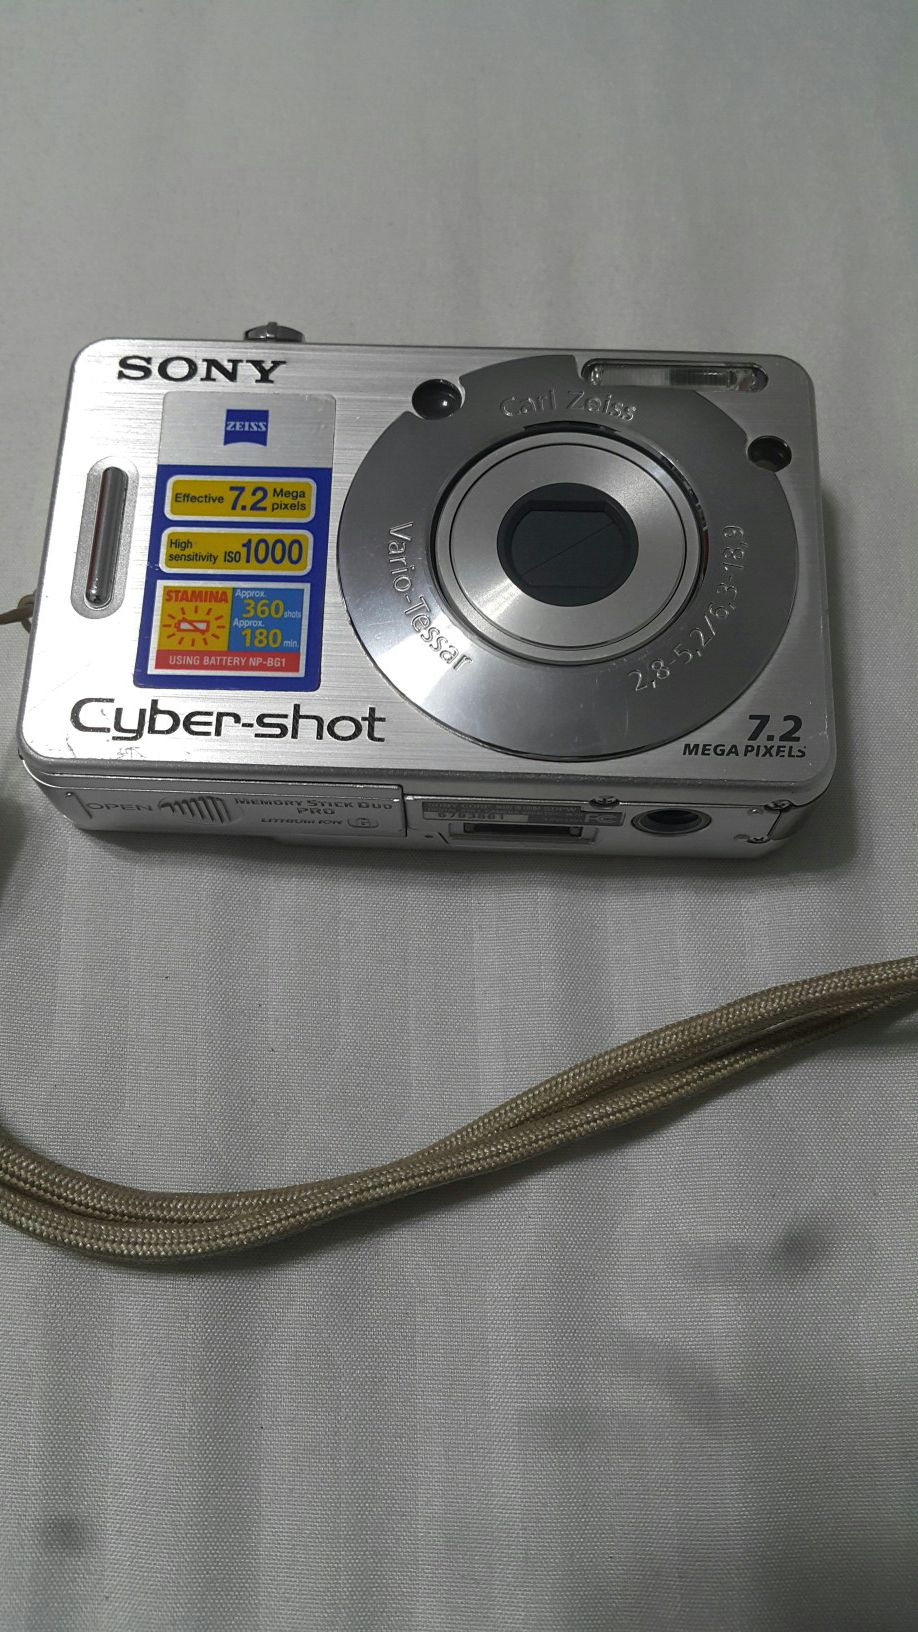 SONY CYBERSHOT DSC-M70 DIGITAL CAMERA